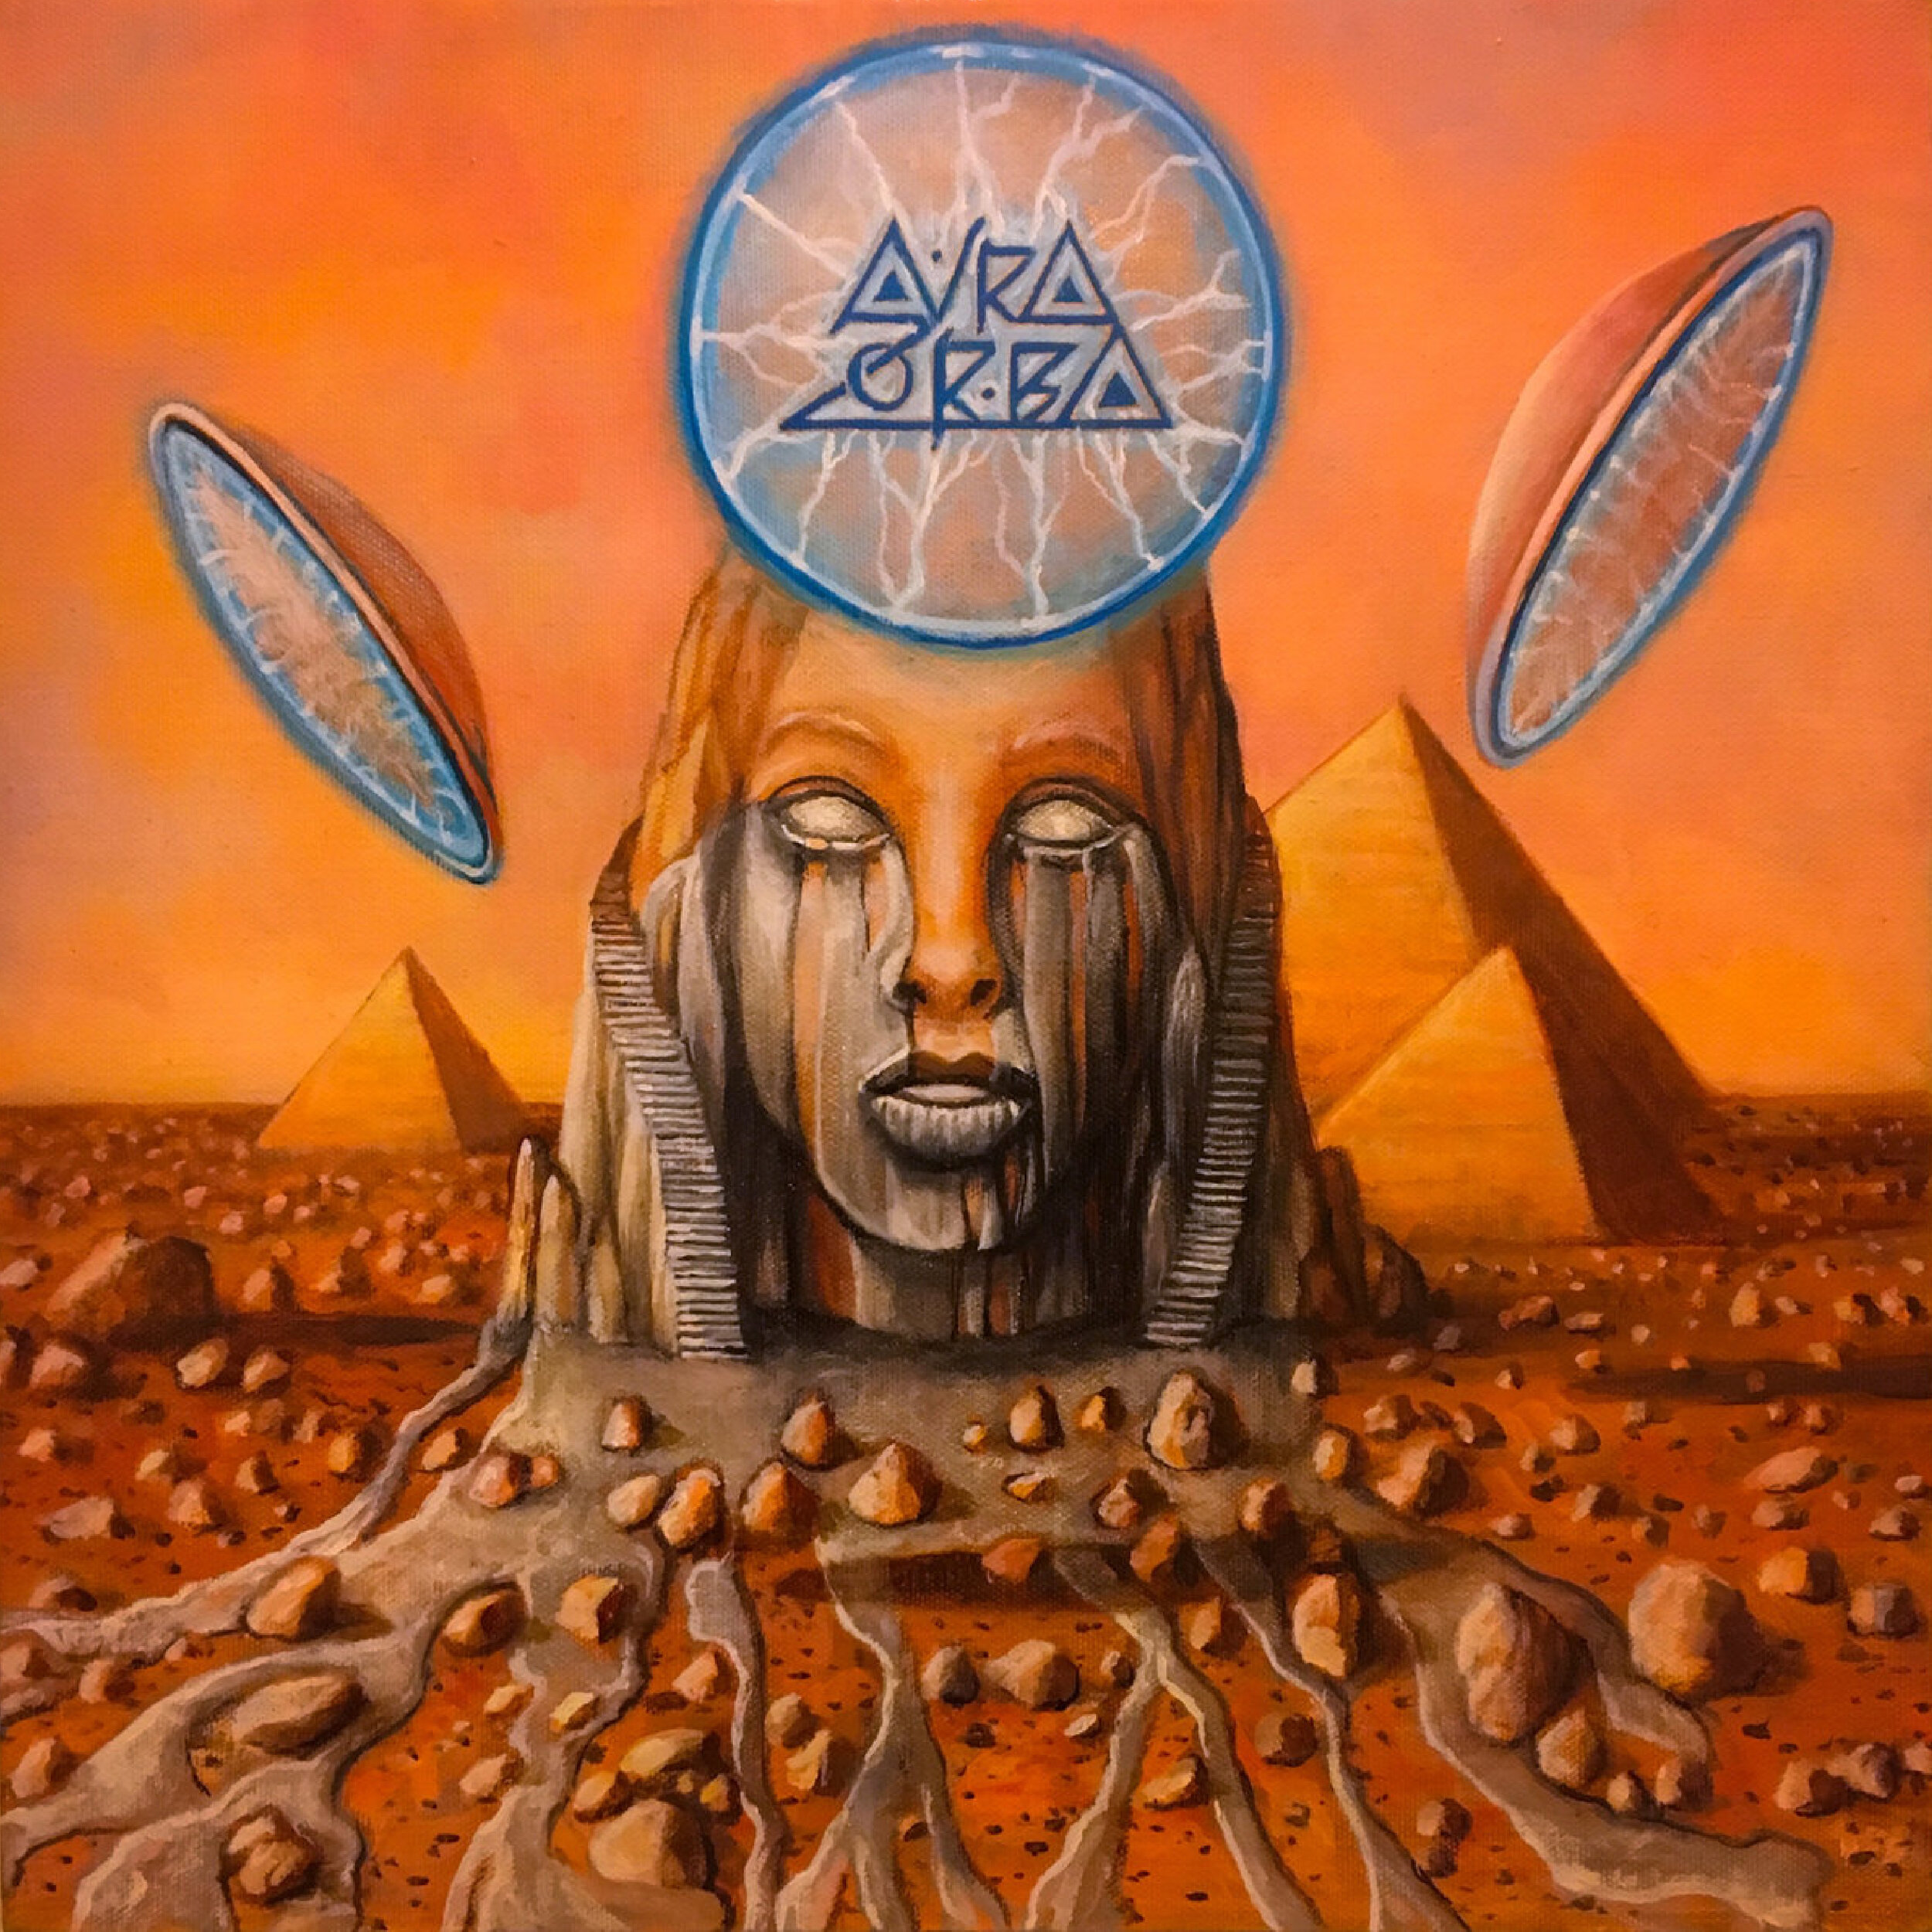 Aura Zorba - Sweets of Mars Cover.jpg